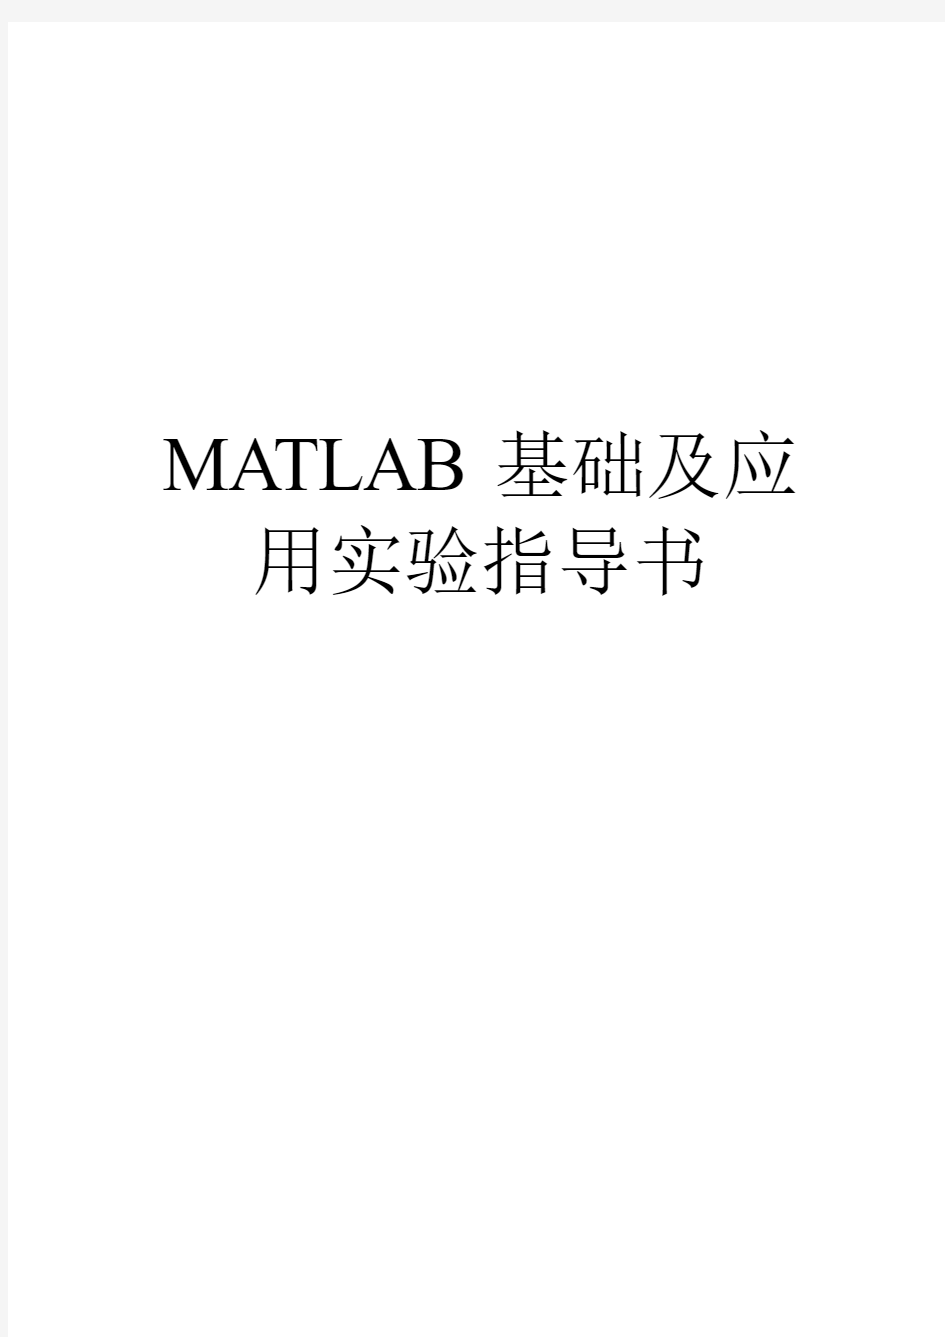 MATLAB基础及应用实验指导书